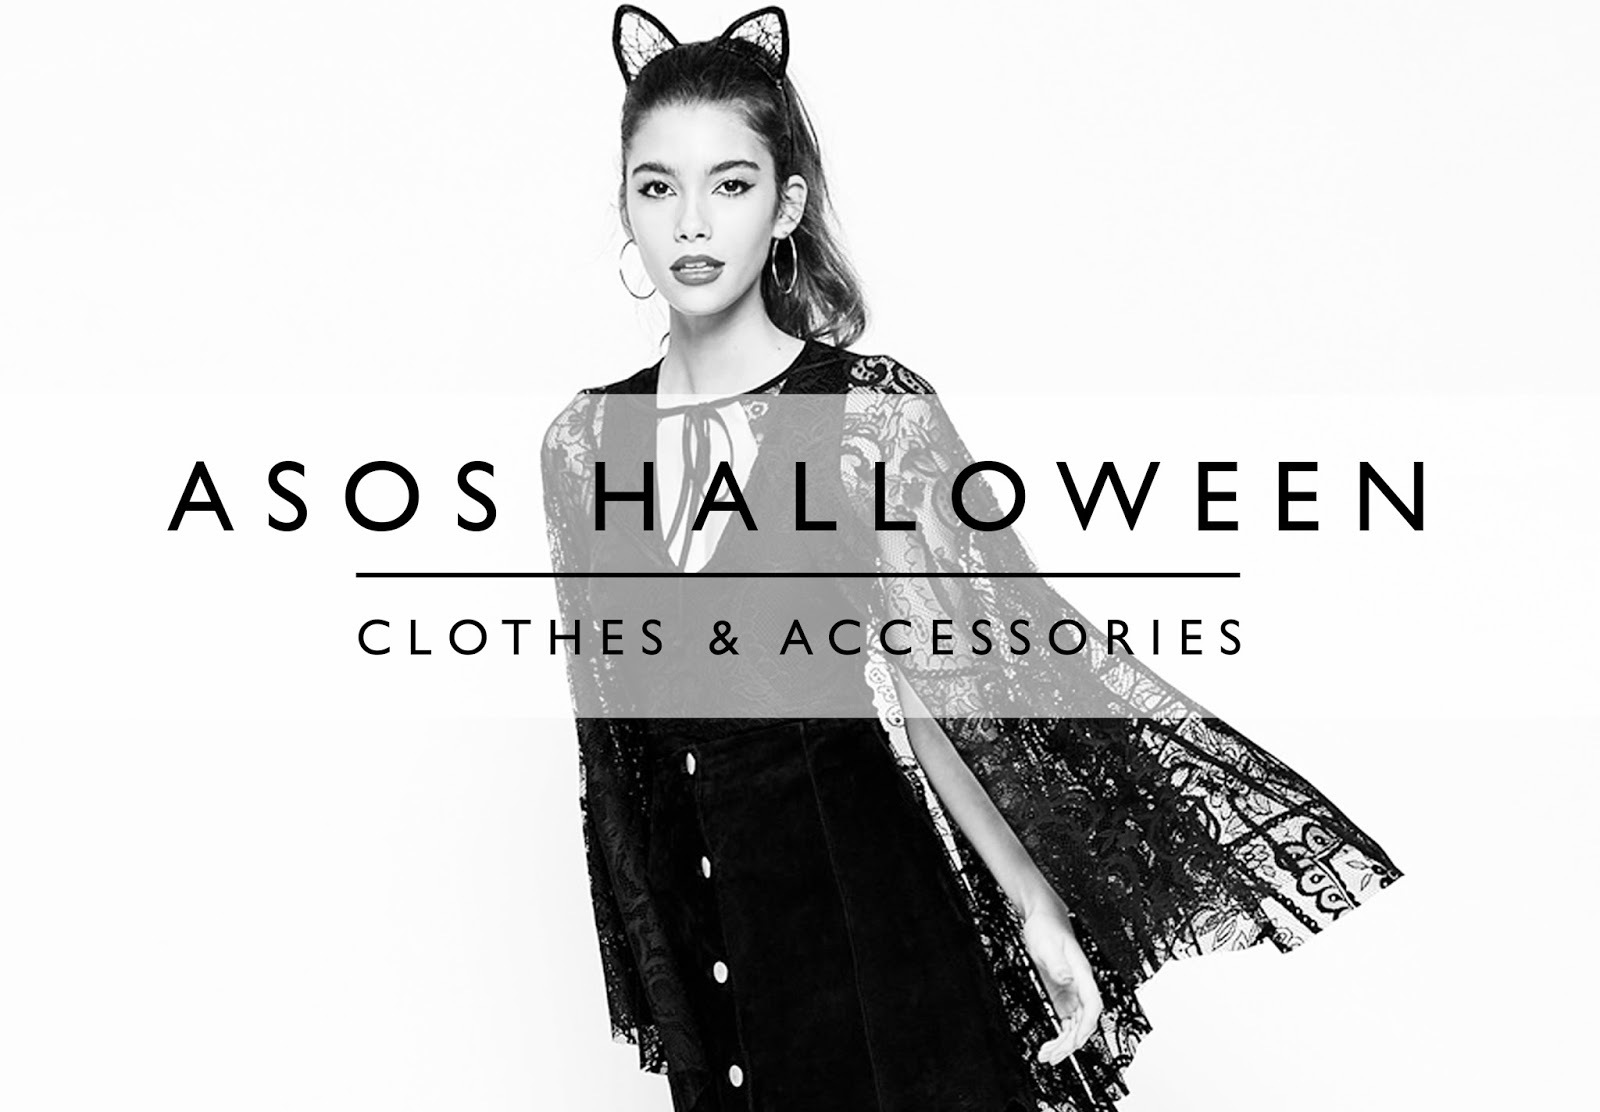  ASOS  HALLOWEEN  CLOTHES ACCESSORIES vihsee